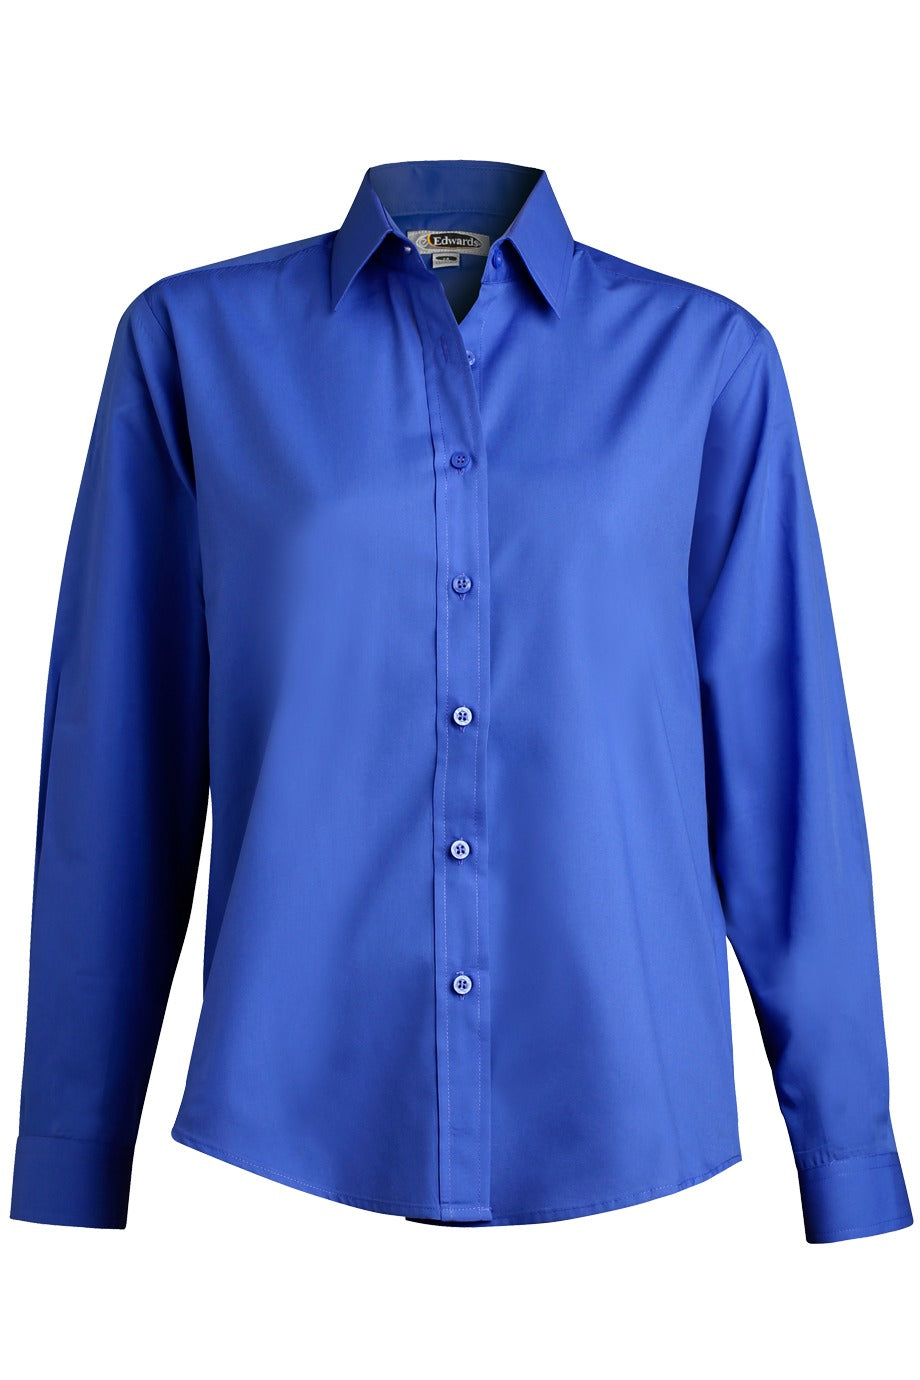 royal blue long sleeve shirt